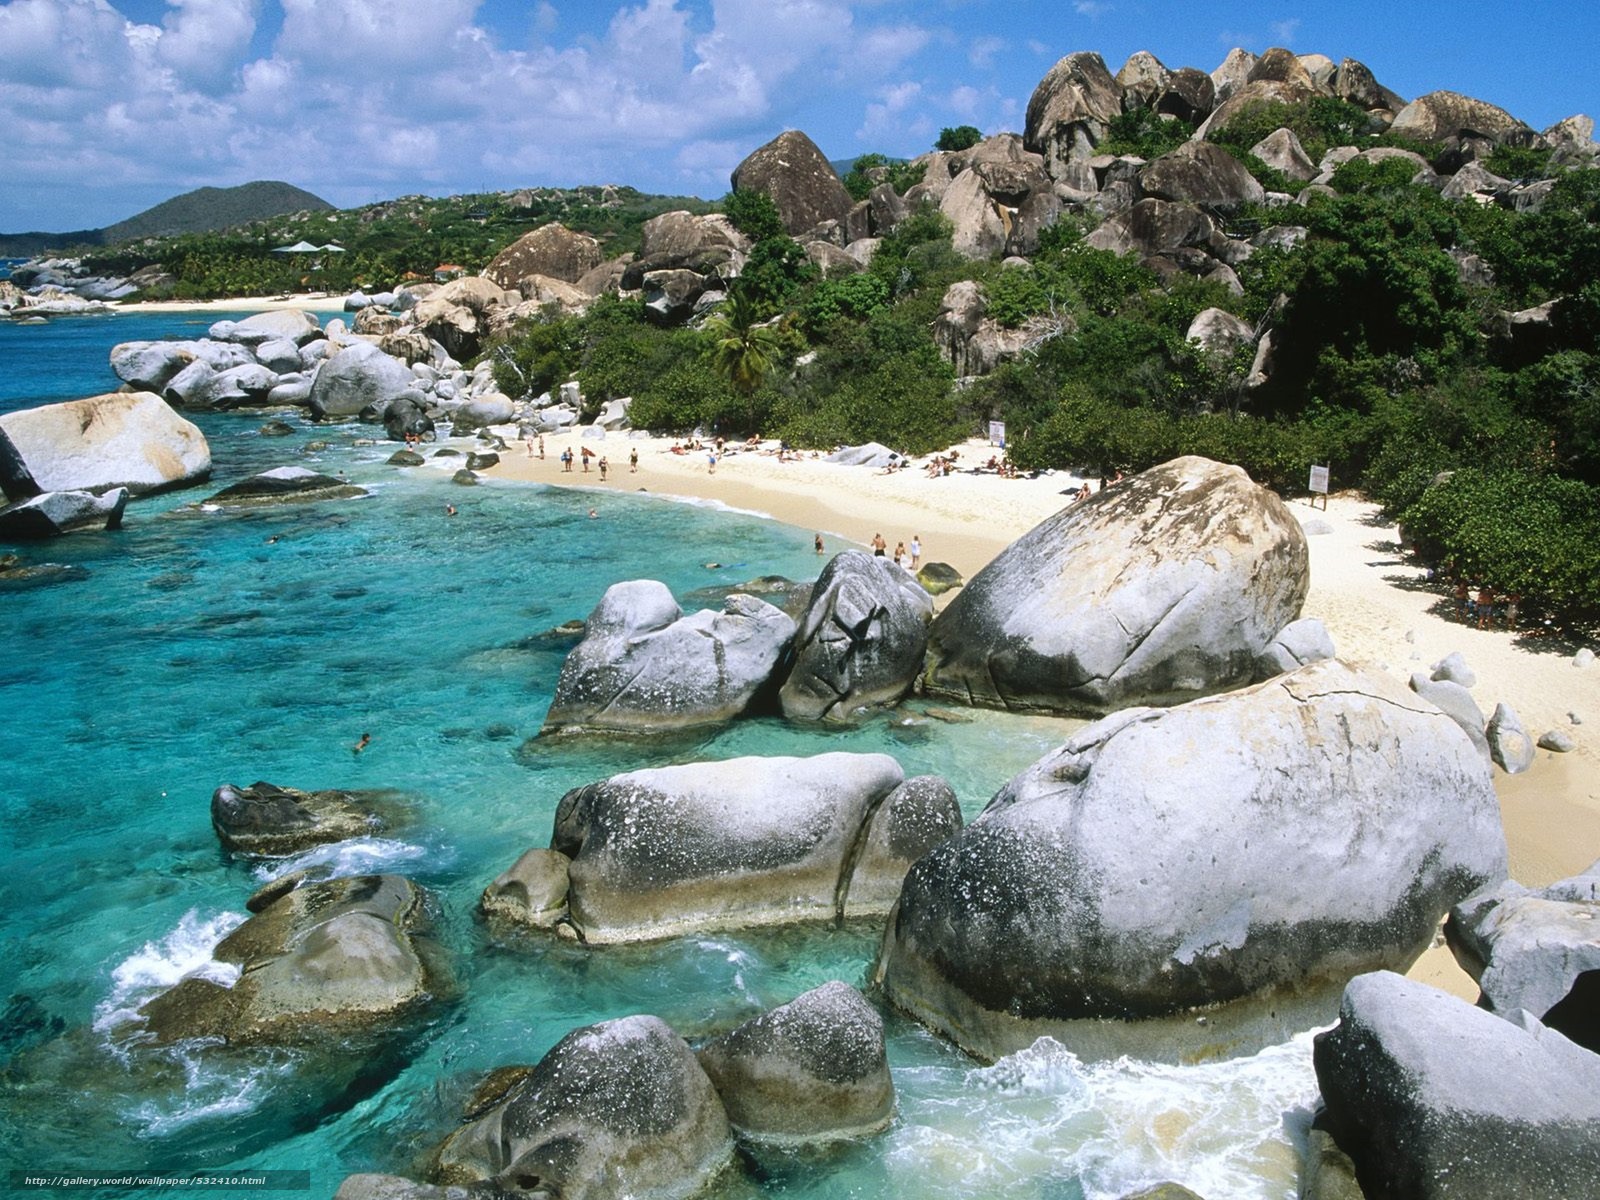 Download wallpaper Caribbean Island beach landscape free desktop